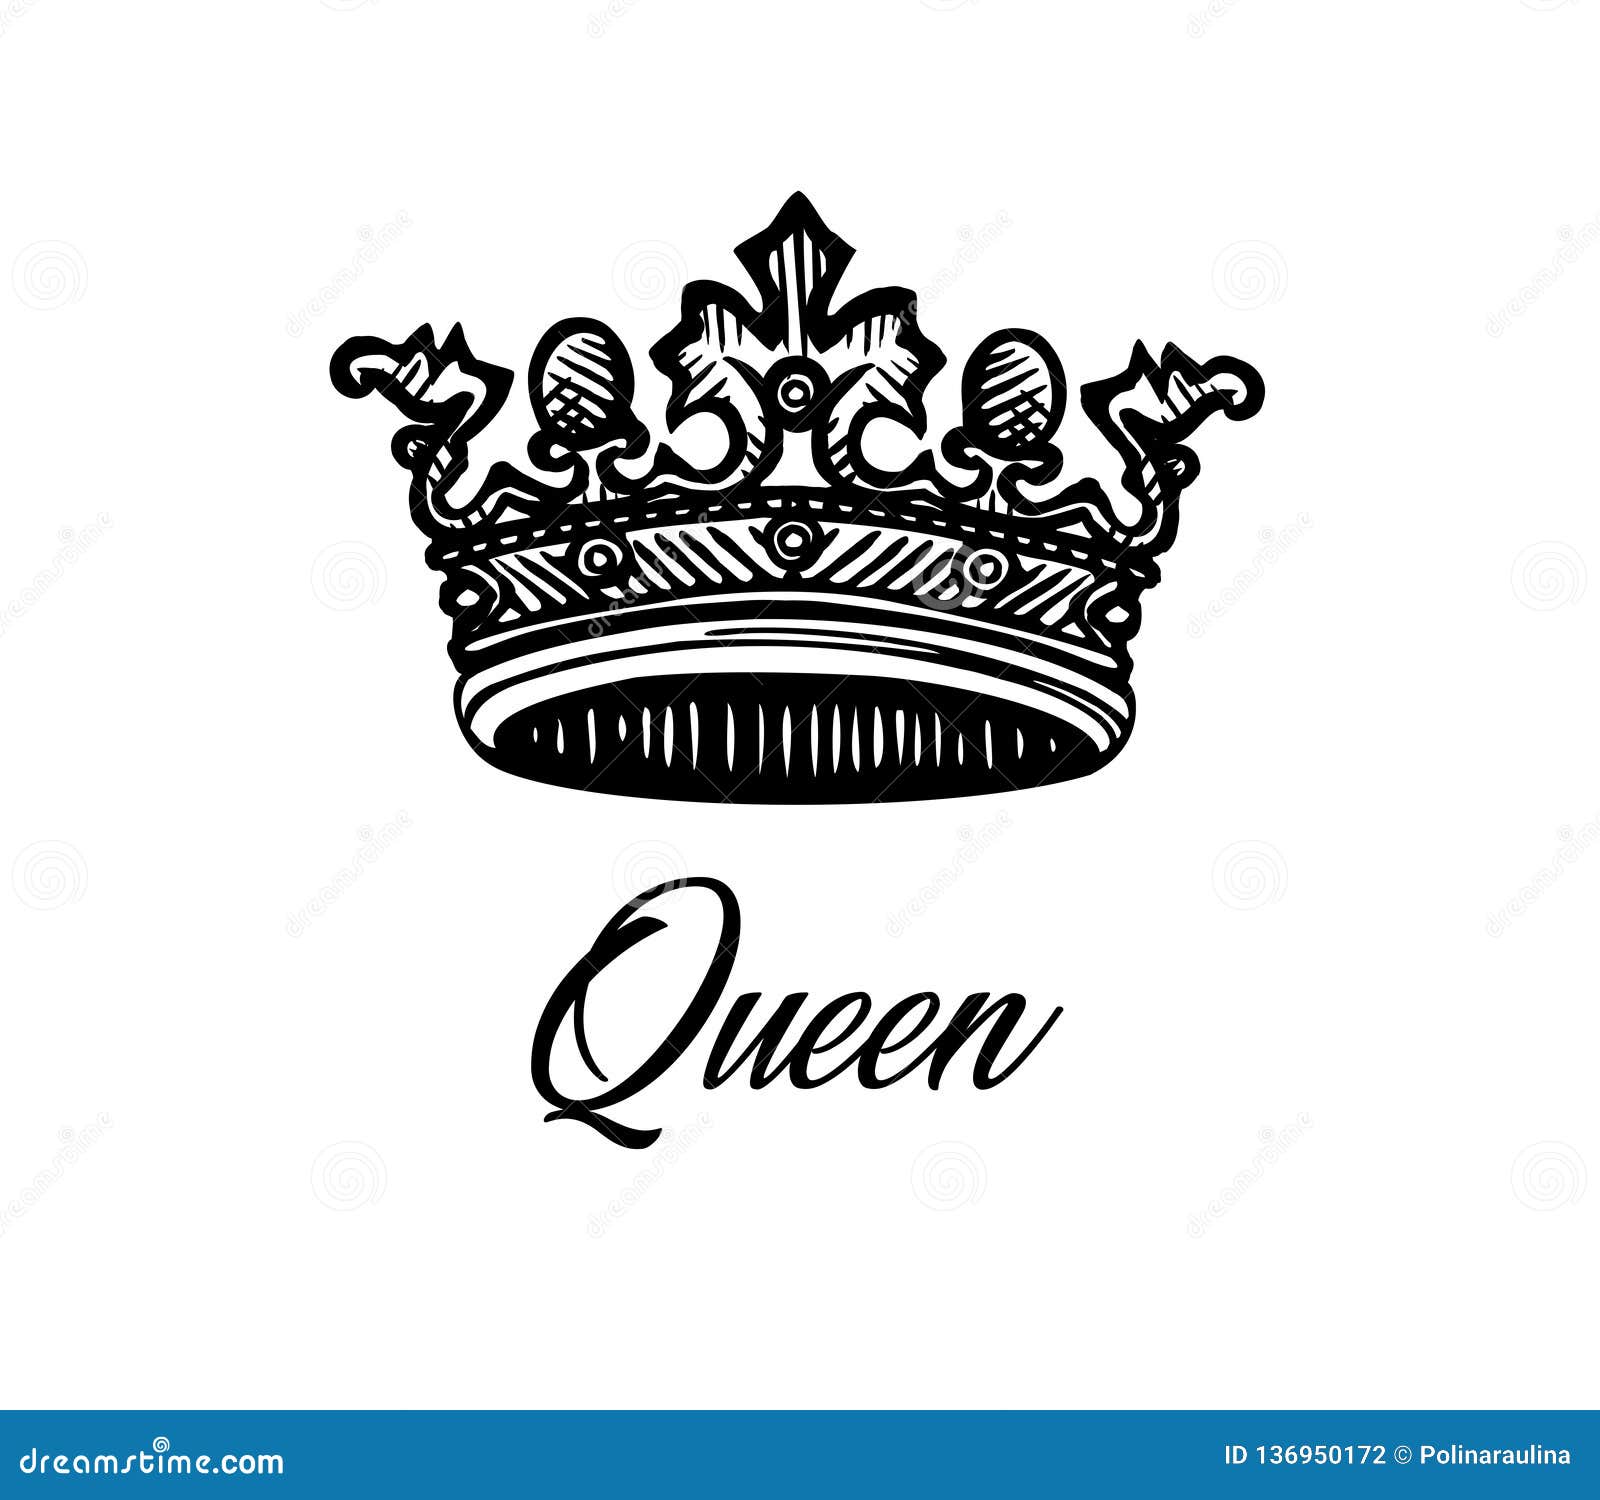 www.shutterstock.com/image-vector/hand-drawn-crown...